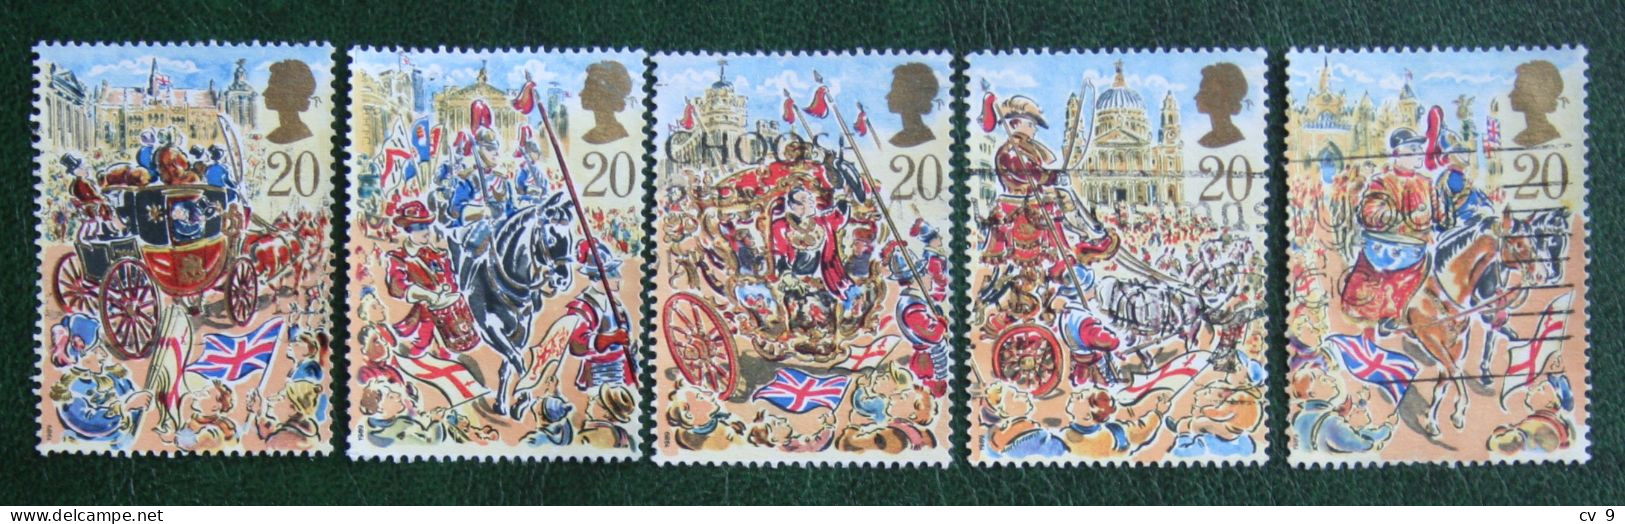 Lord Mayor LONDON WAR HORSE MILITARY Mi 1230-1234 1989 Used Gebruikt Oblitere ENGLAND GRANDE-BRETAGNE GB GREAT BRITAIN - Used Stamps